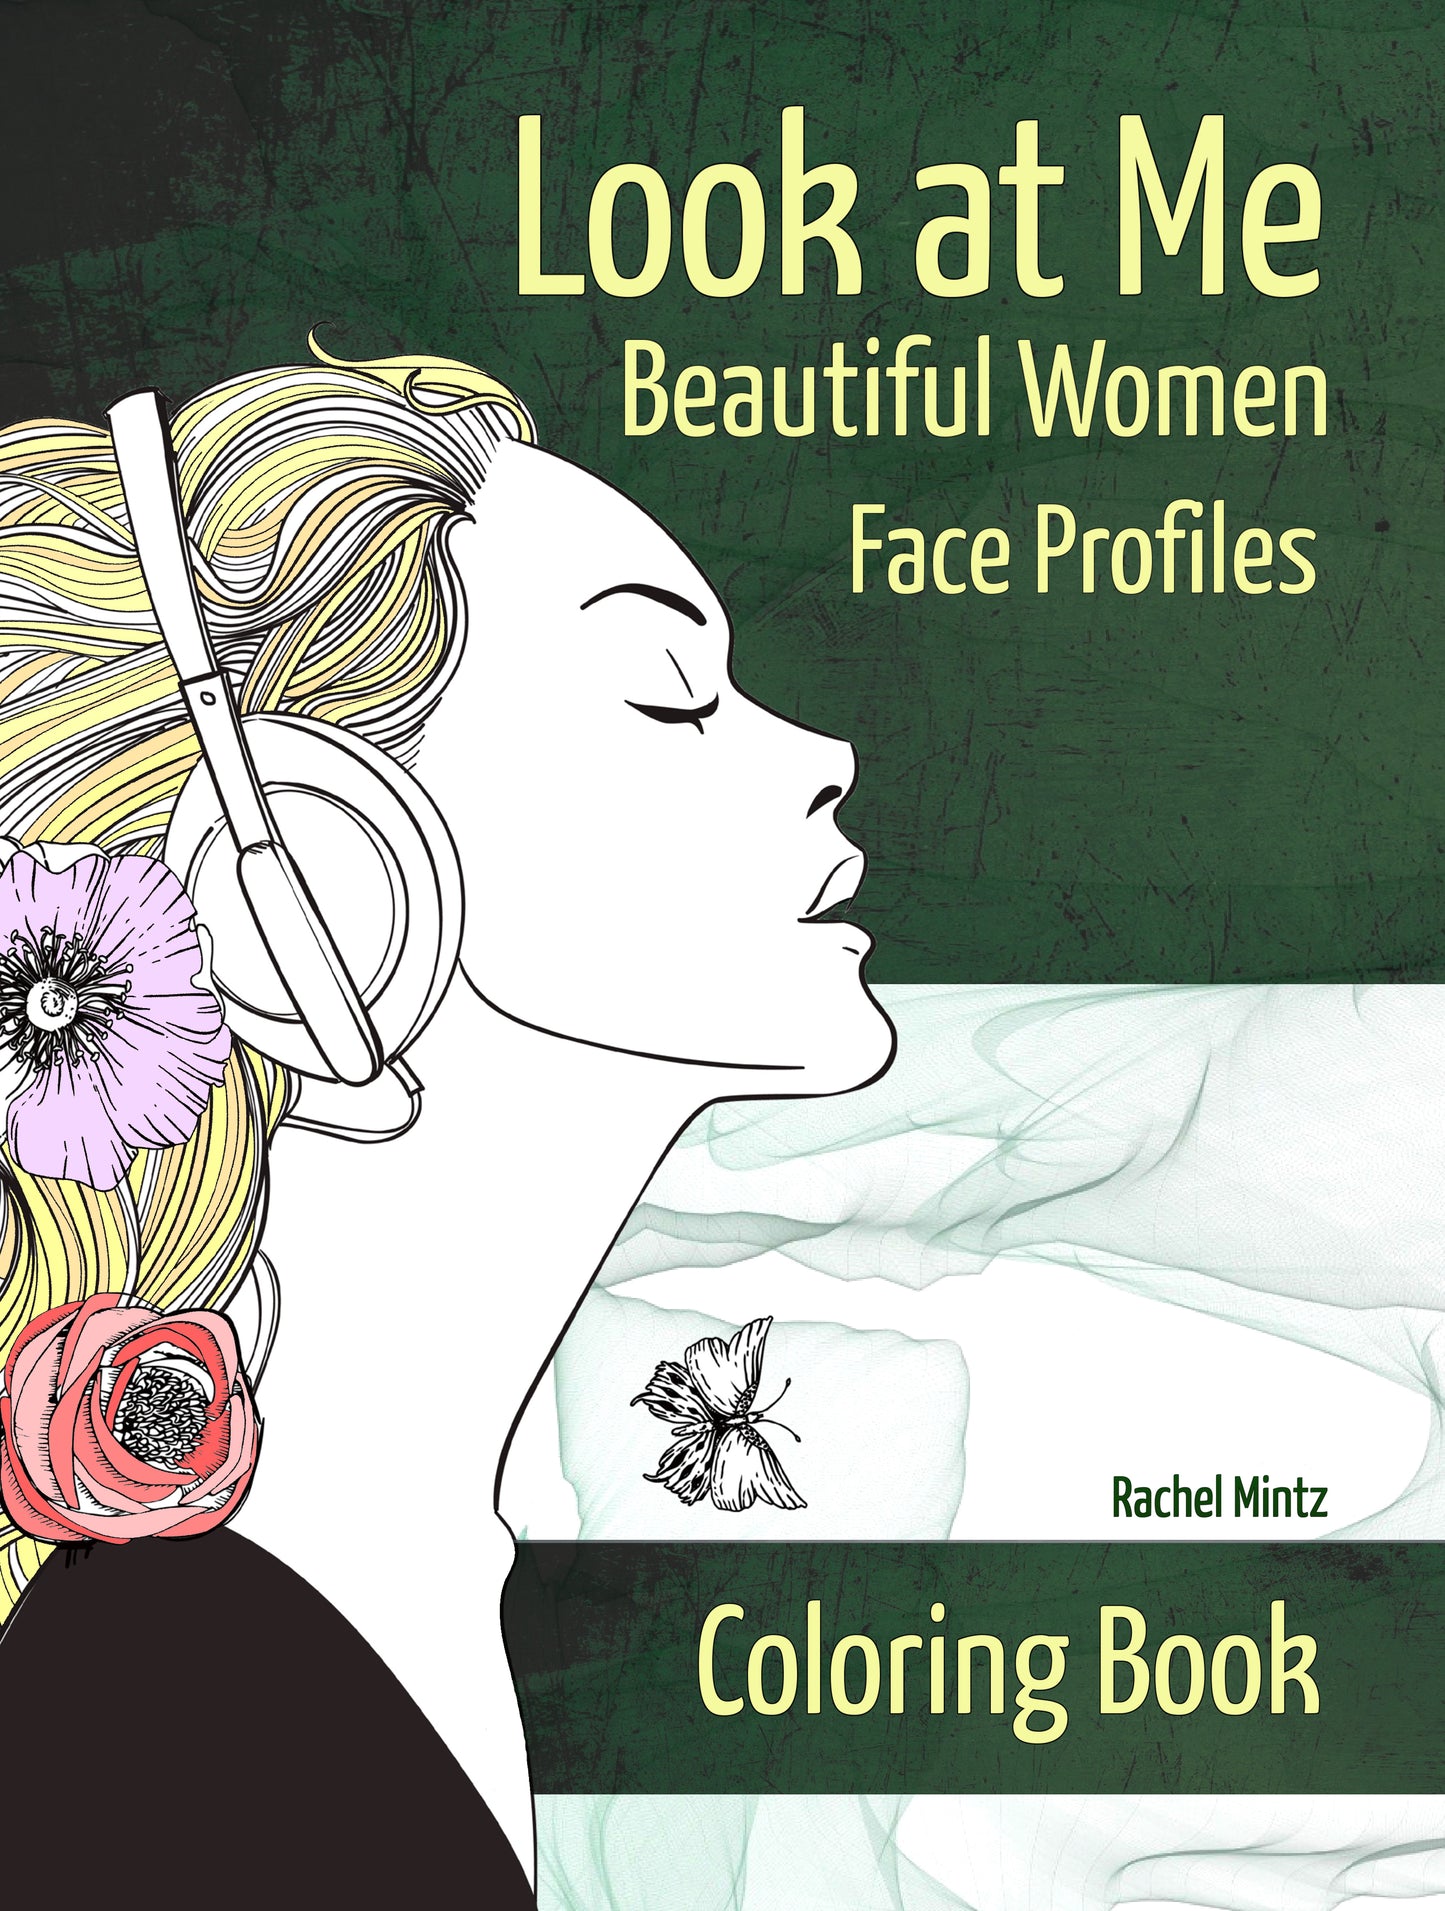 Look at Me - Beautiful Women Face Profiles Coloring book Rachel Mintz